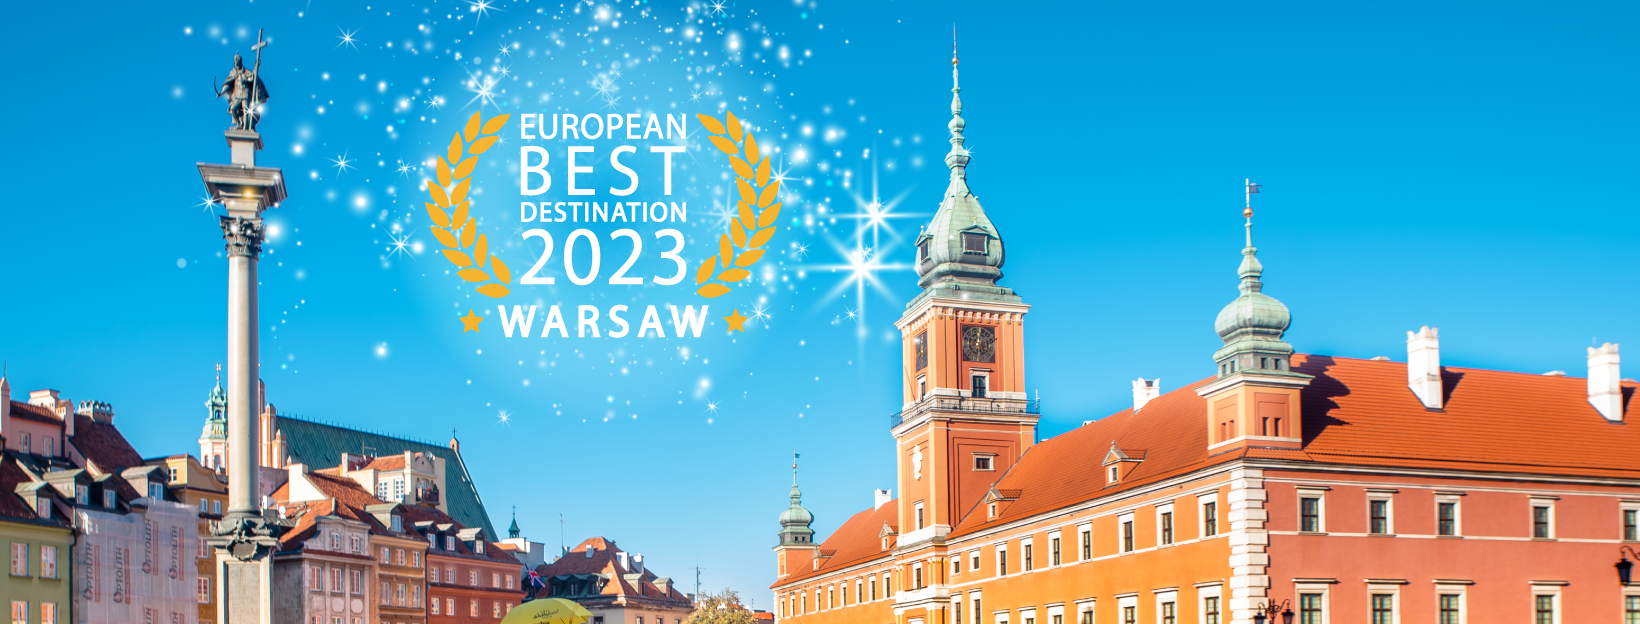 European Best Destinations 2023 warsaw capital poland